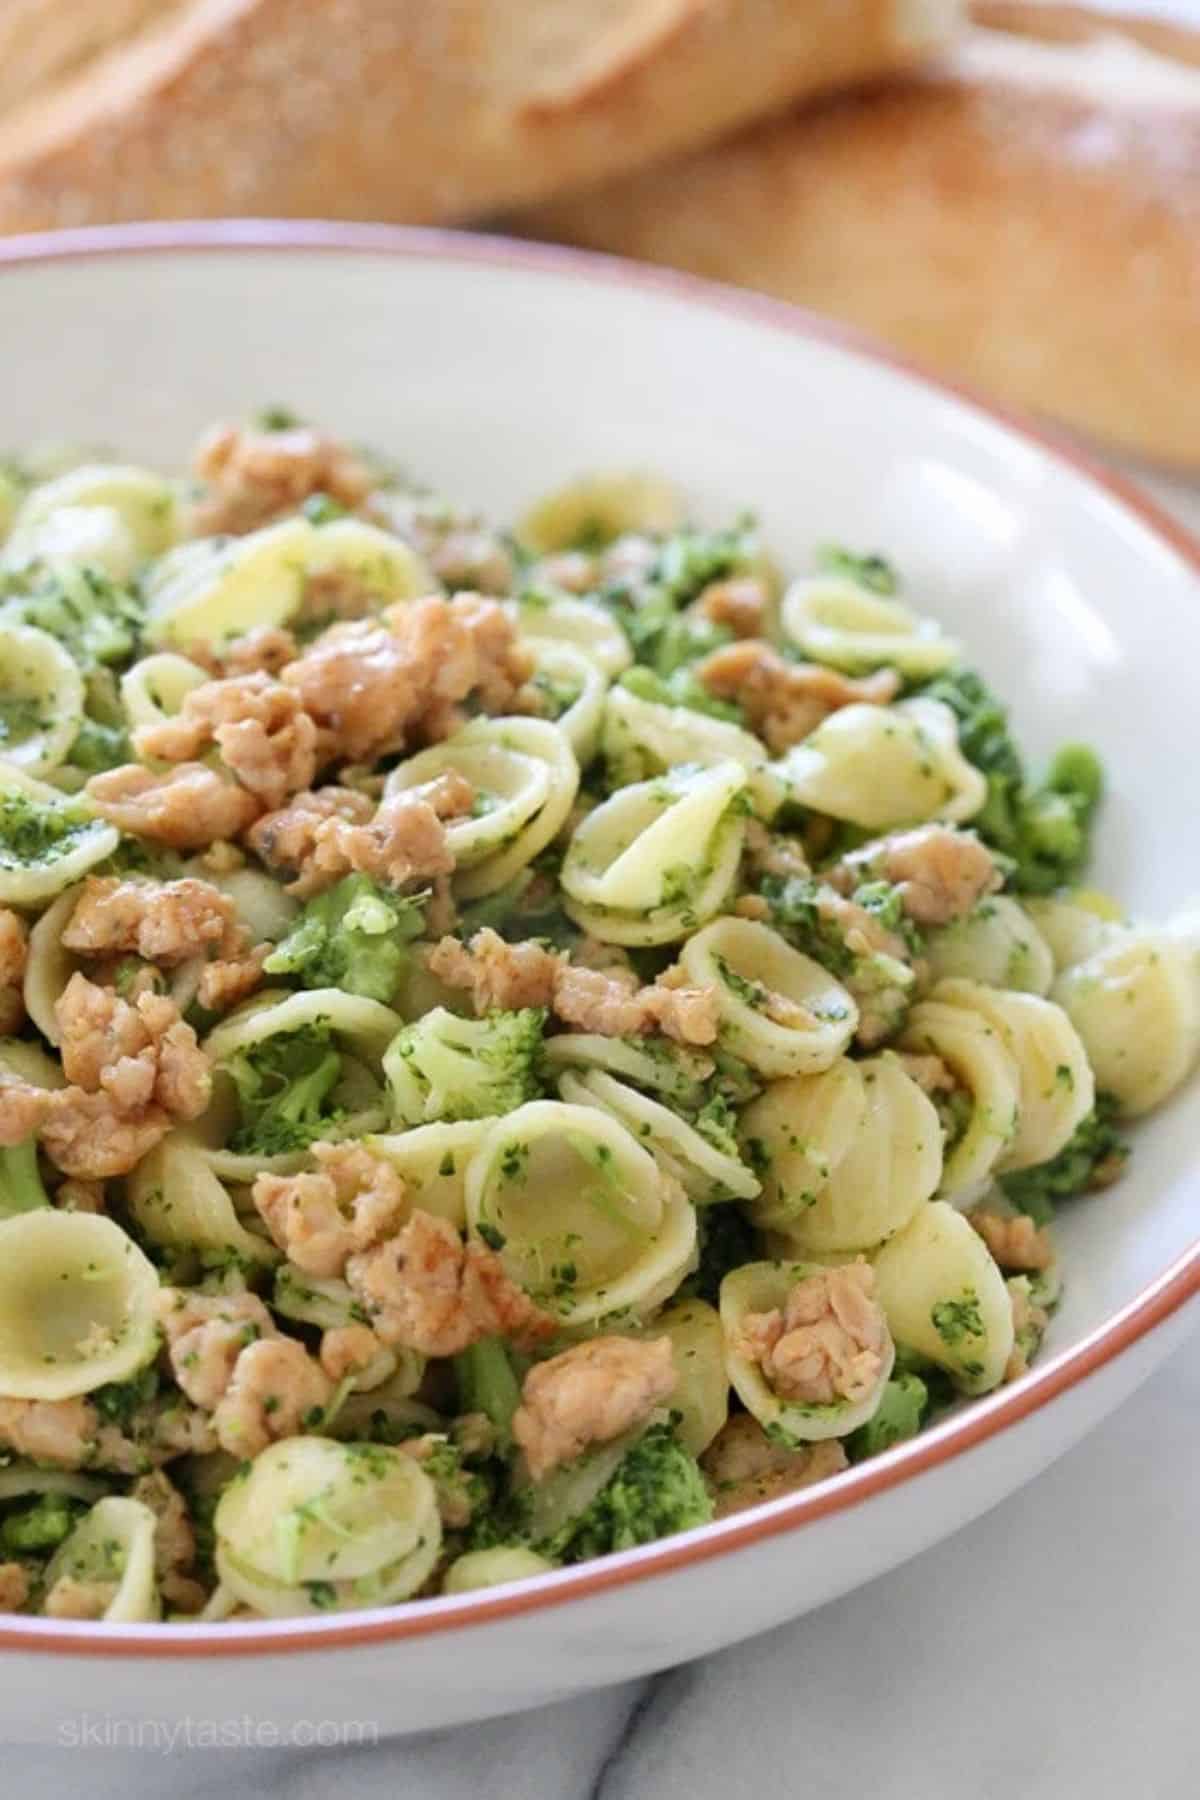 Healthy orecchiette pasta with chicken sausage and broccoli in a bowl.